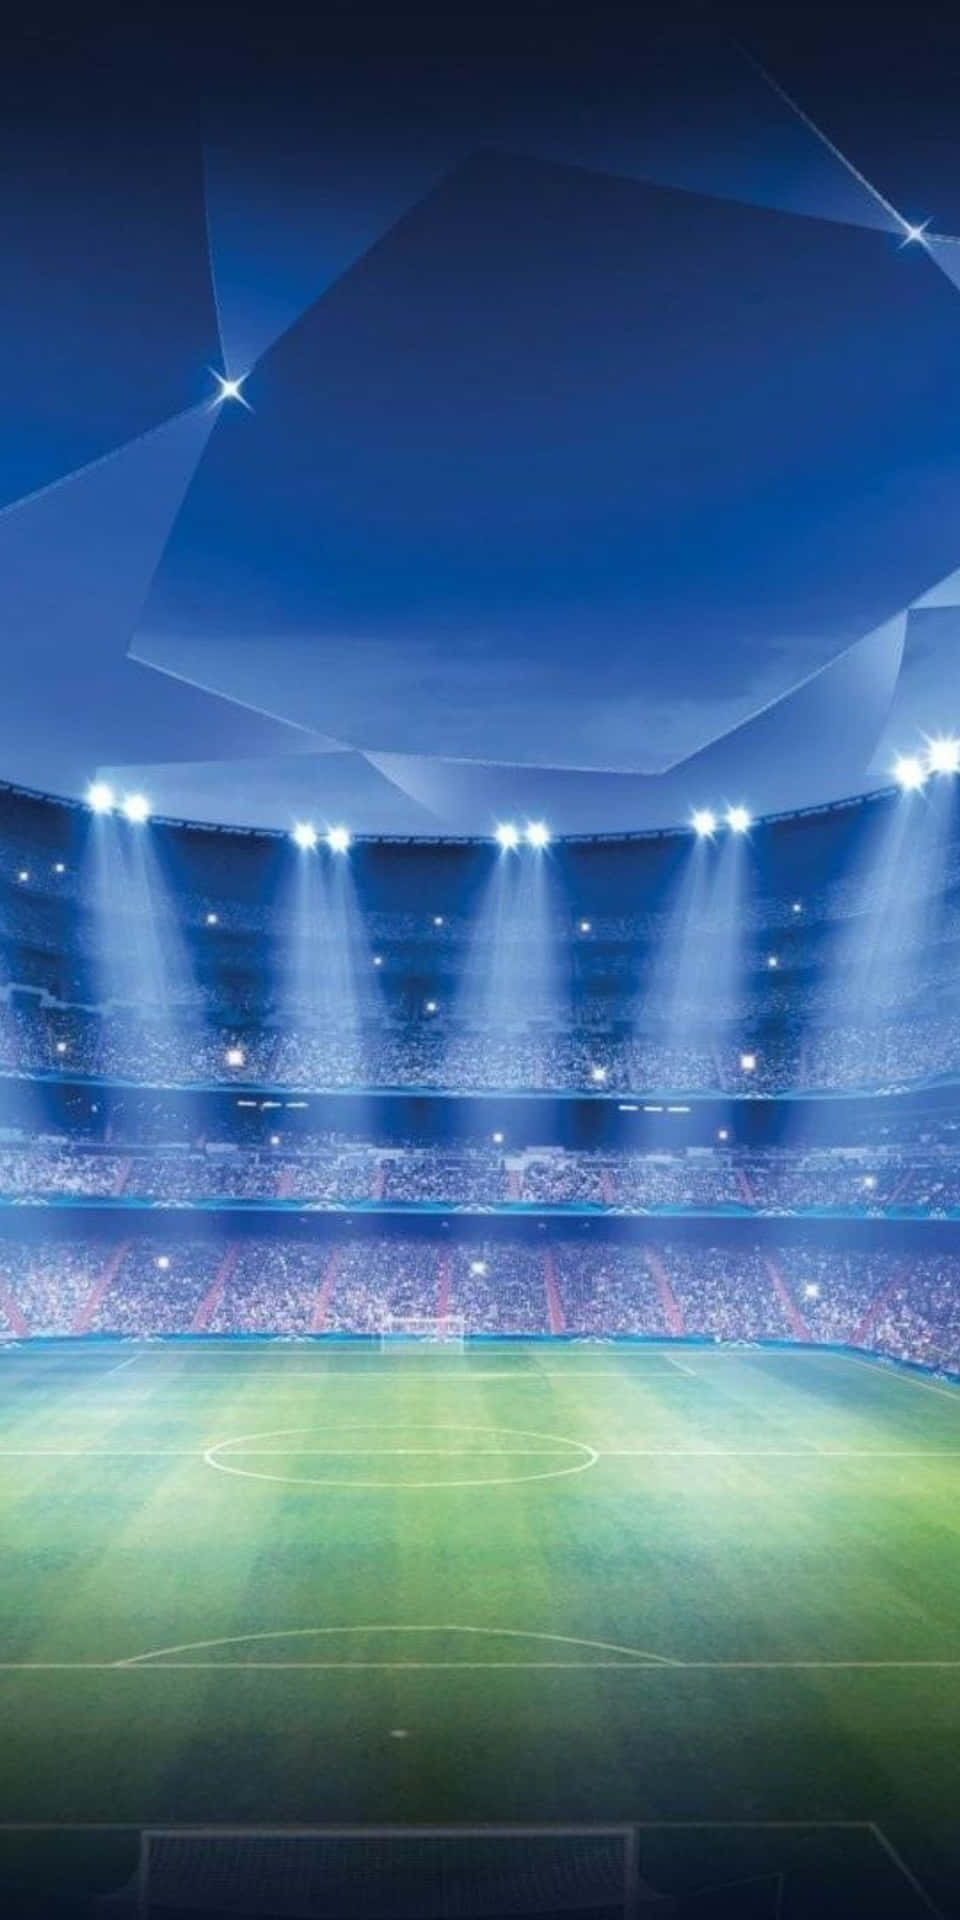 Pixel 3 Football Stadium Background